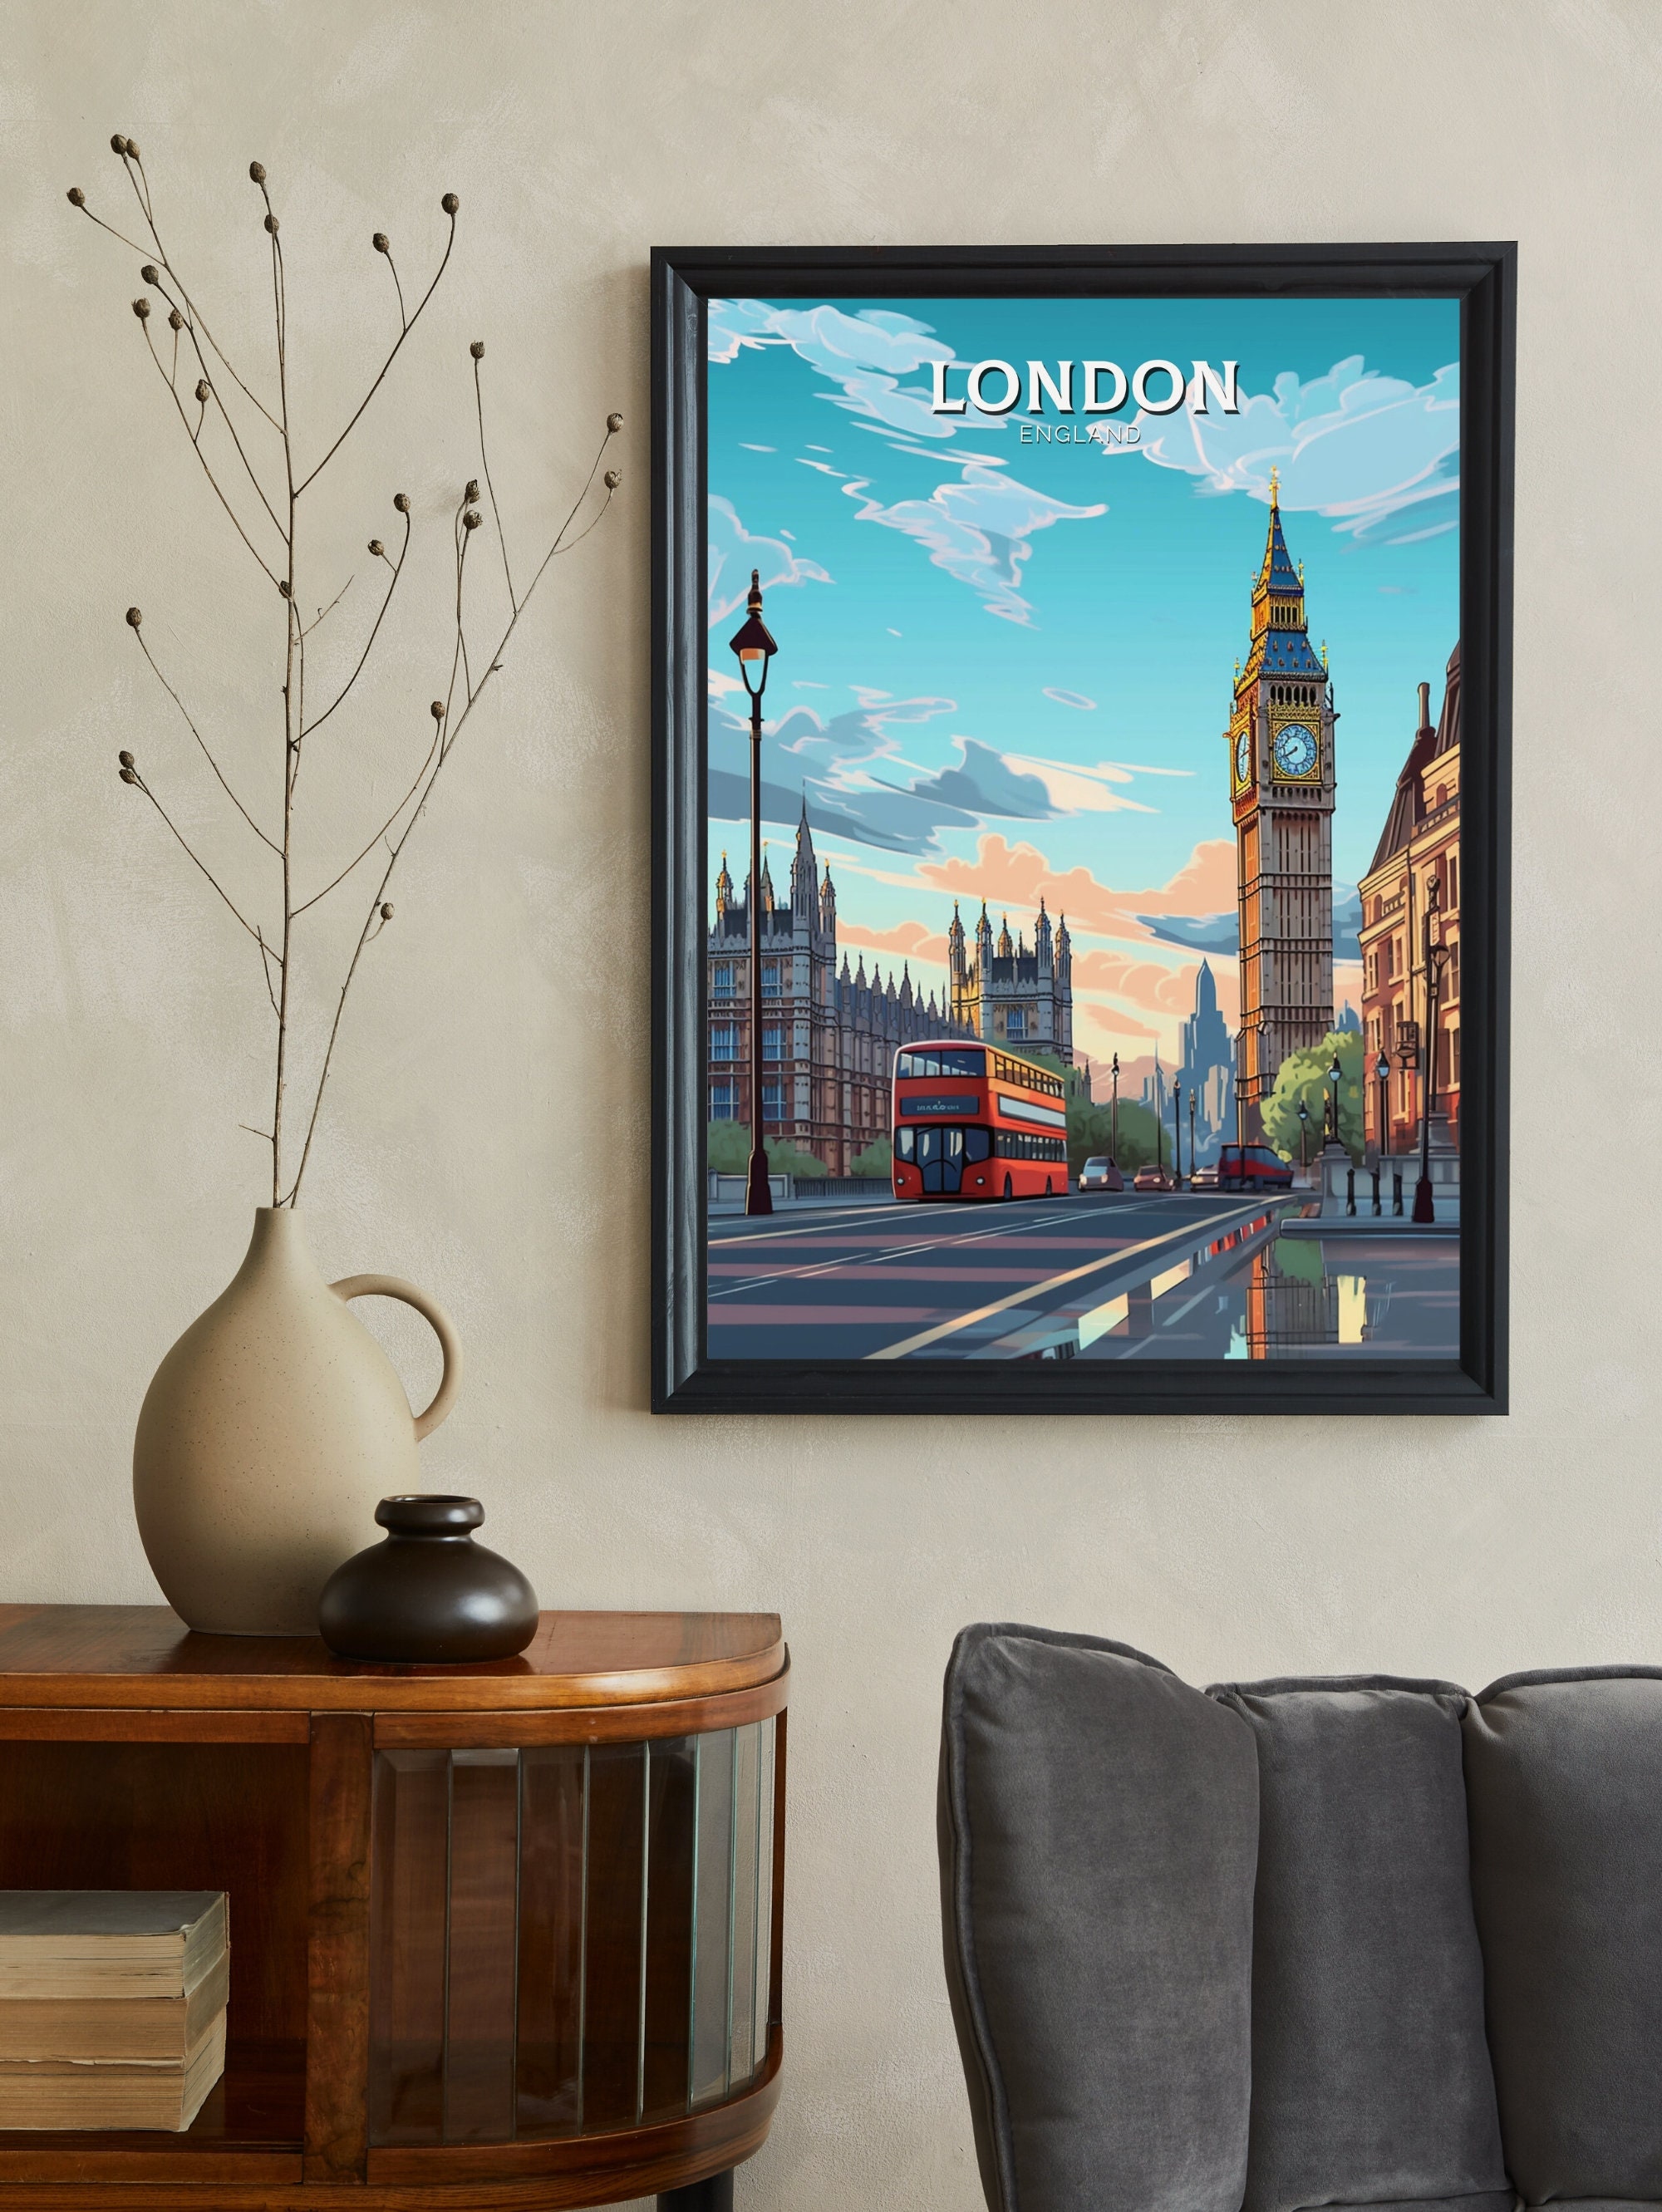 Discover London Travel Print | London Illustration | London Wall Art | London Big Ben | London Travel Poster  No Frame